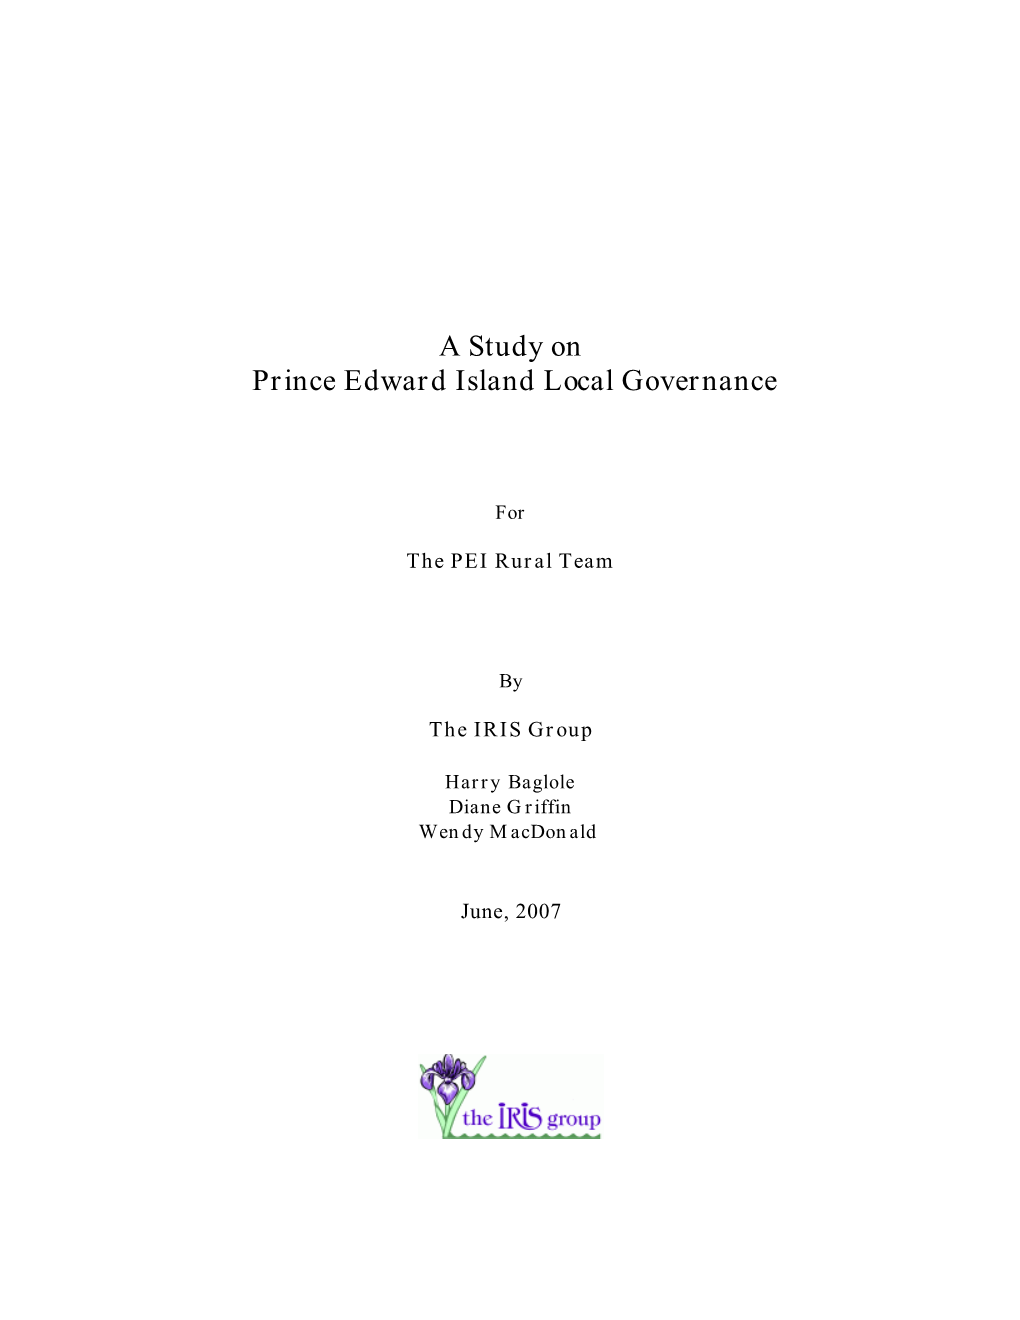 A Study on Prince Edward Island Local Governance